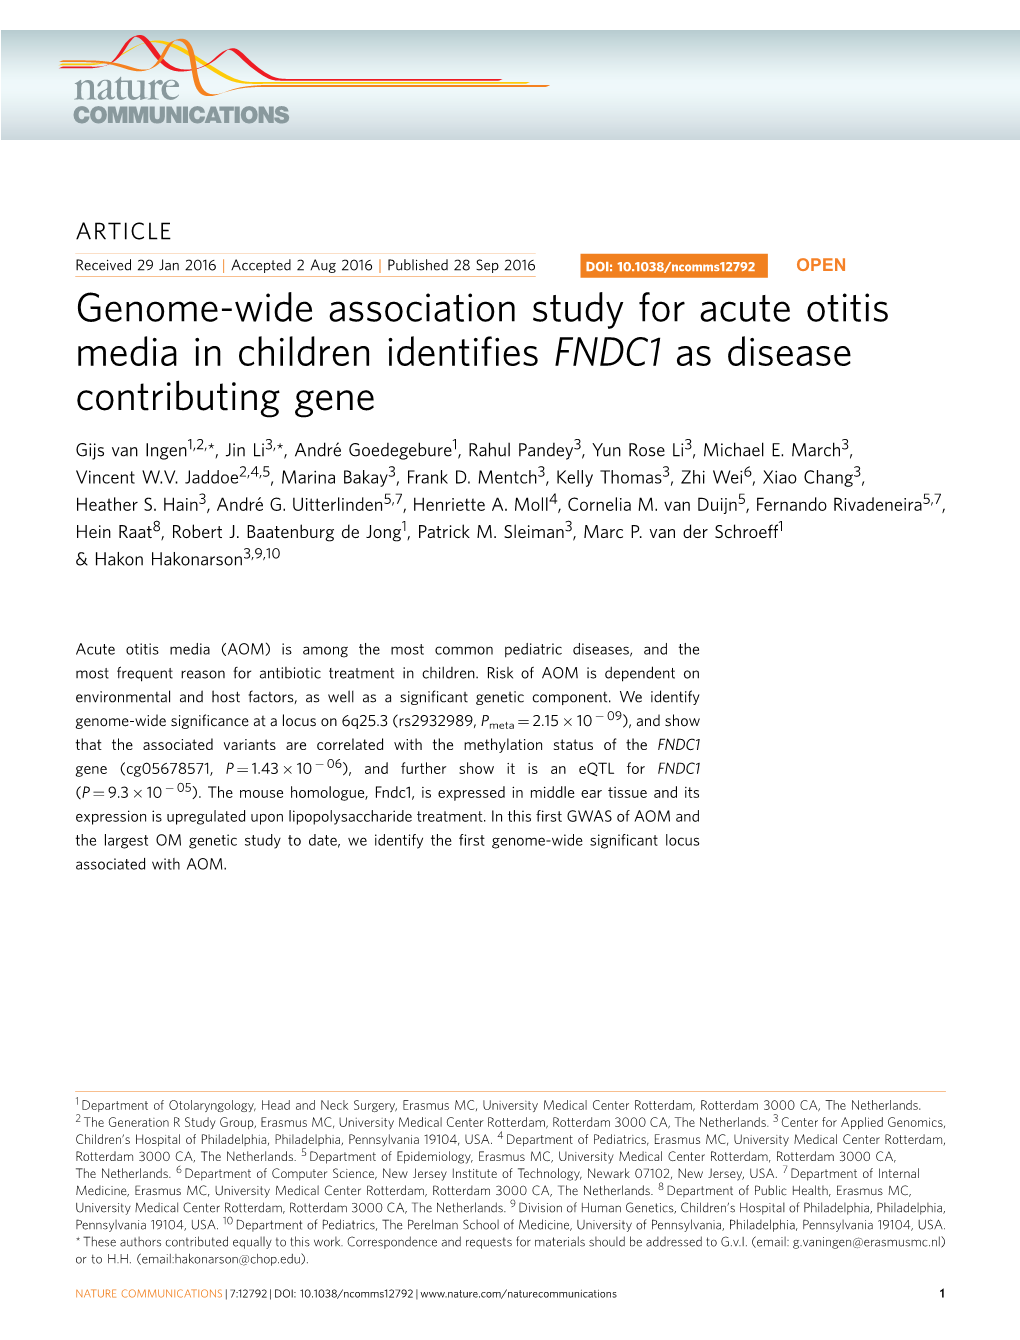 Genome-Wide Association Study for Acute Otitis Media in Children Identifies FNDC1 As Disease Contributing Gene